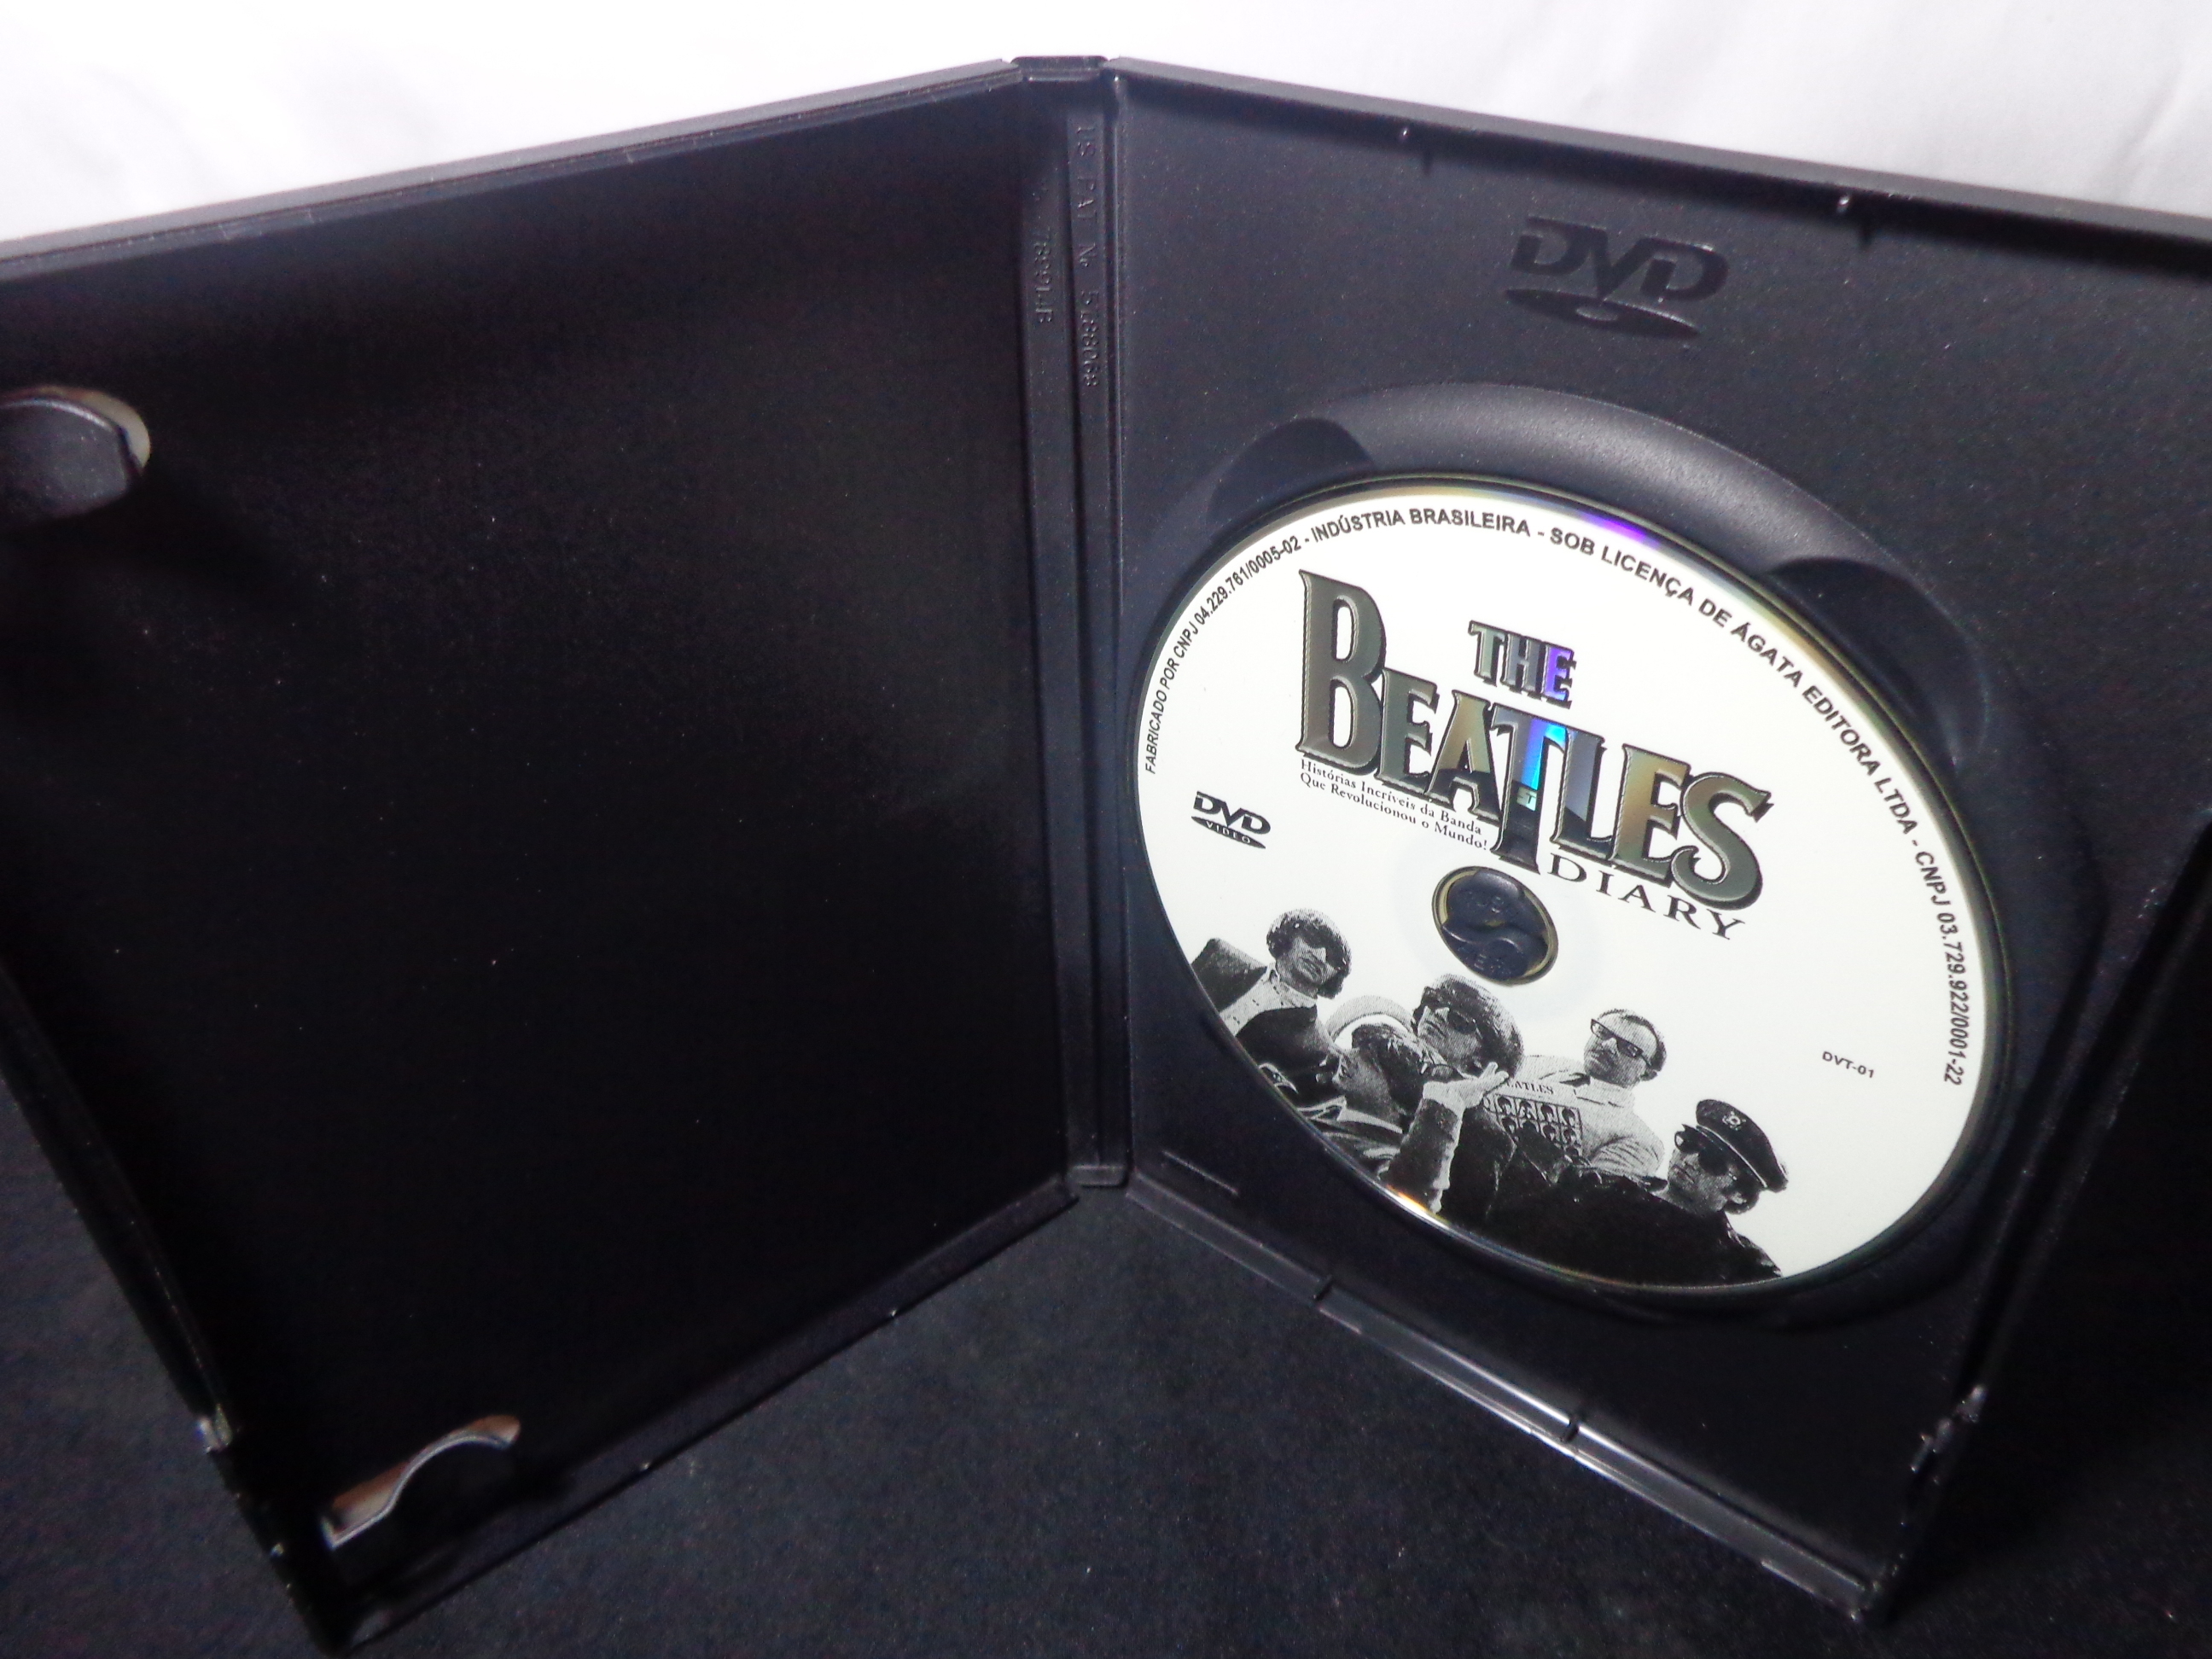 DVD - Beatles the - Diary